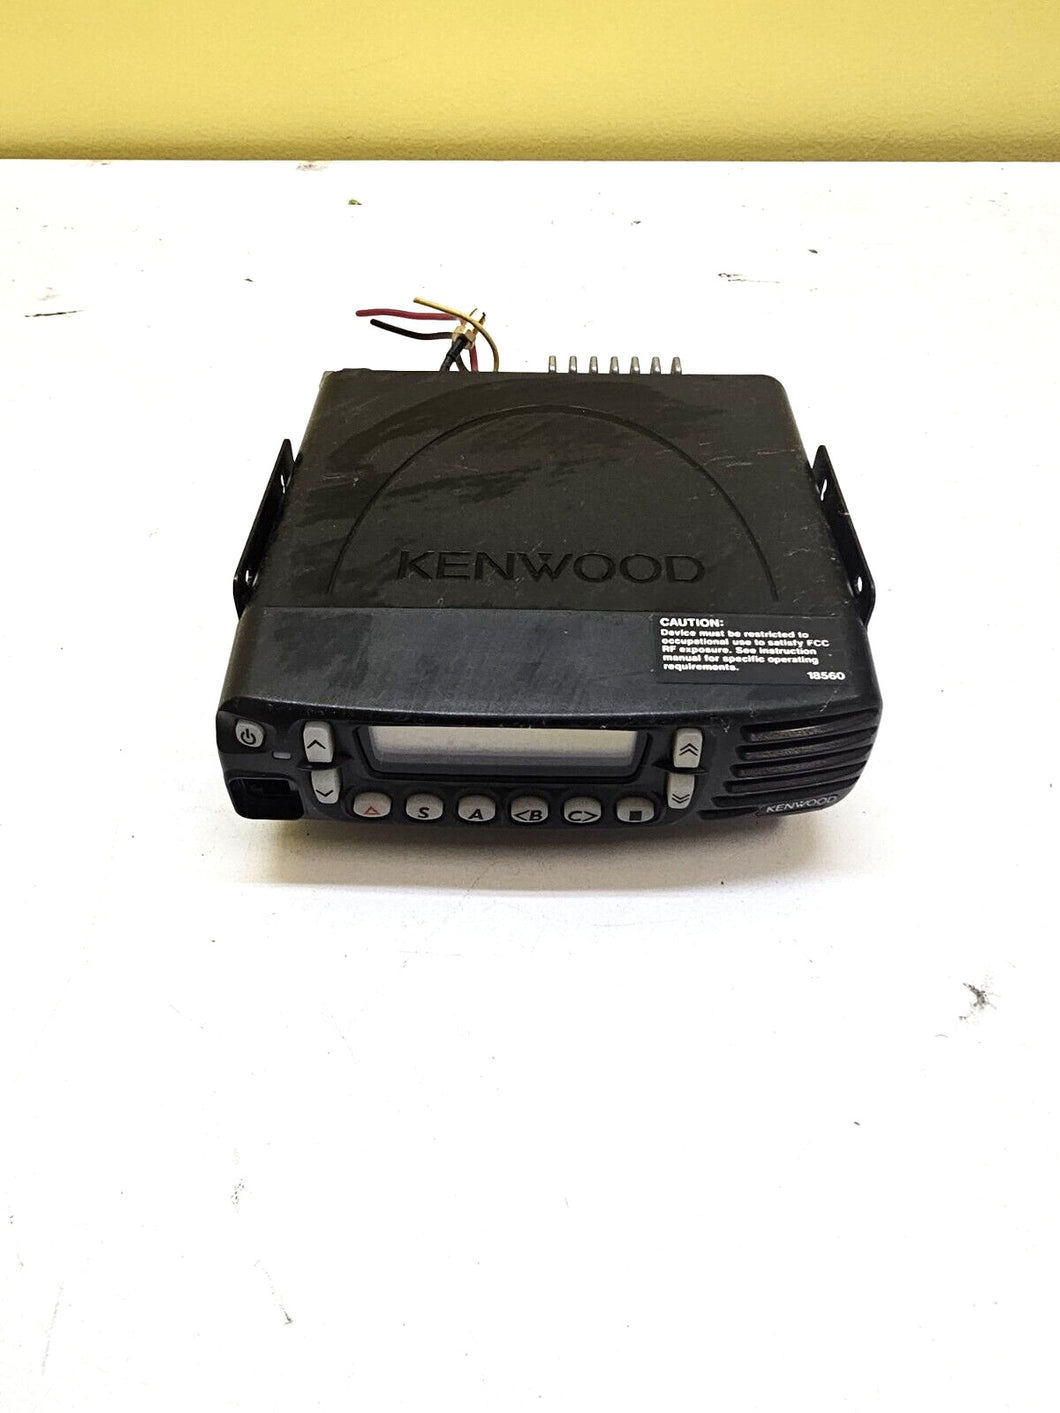 Kenwood TK-7180-K 136-174 MHz VHF Two Way Radio w Bracket TK-7180